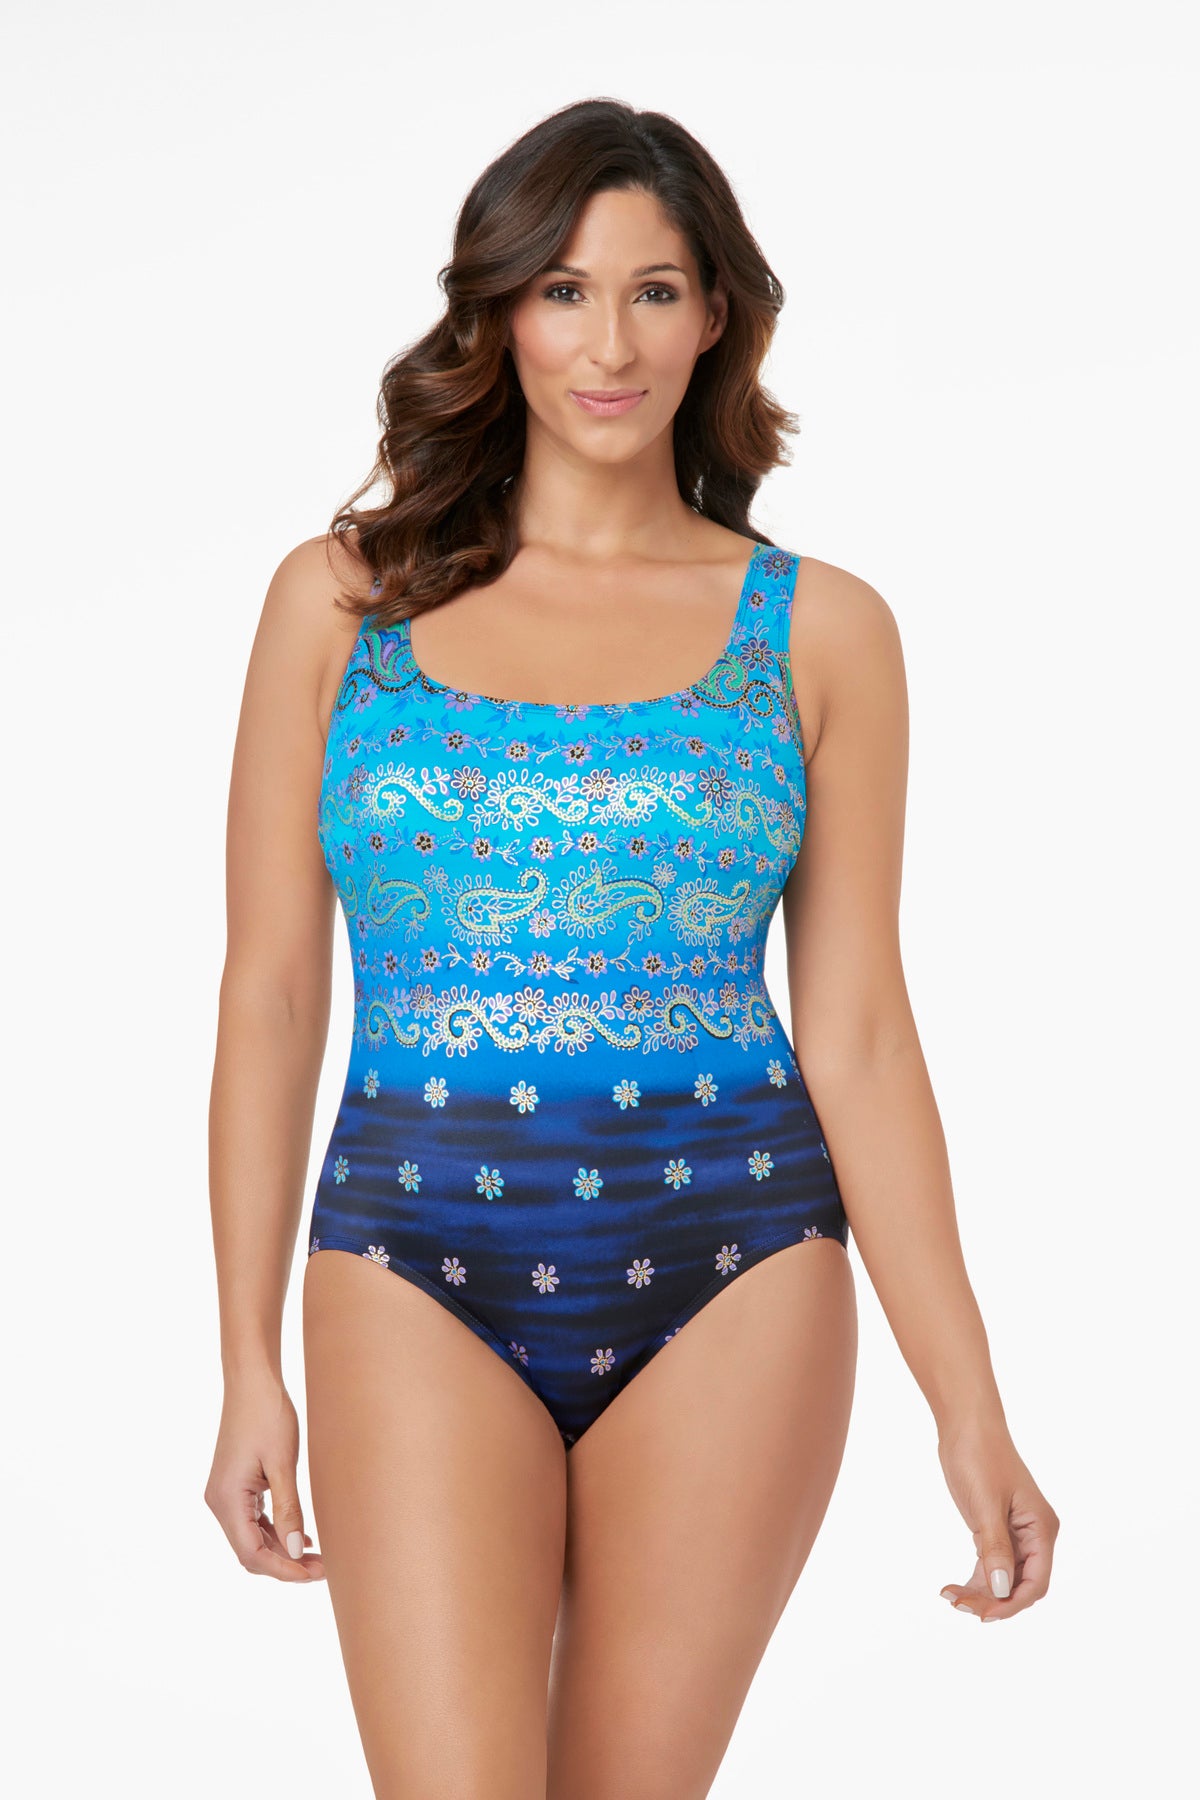 XL) Robby Len Plus Size One Piece Swimsuit, Women's Fashion, Swimwear,  Bikinis & Swimsuits on Carousell